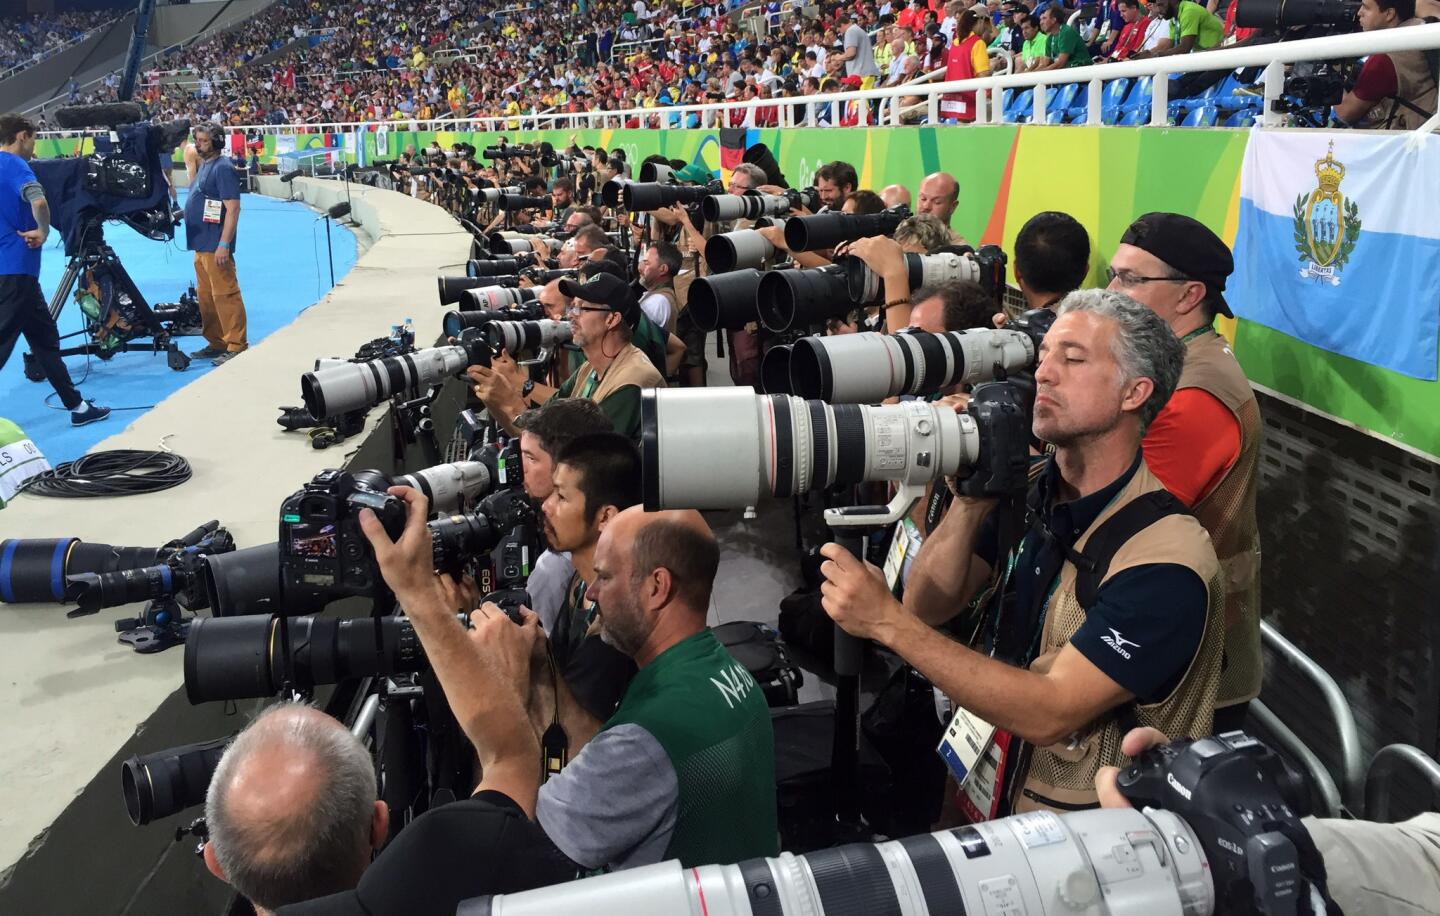 Olympic photographers